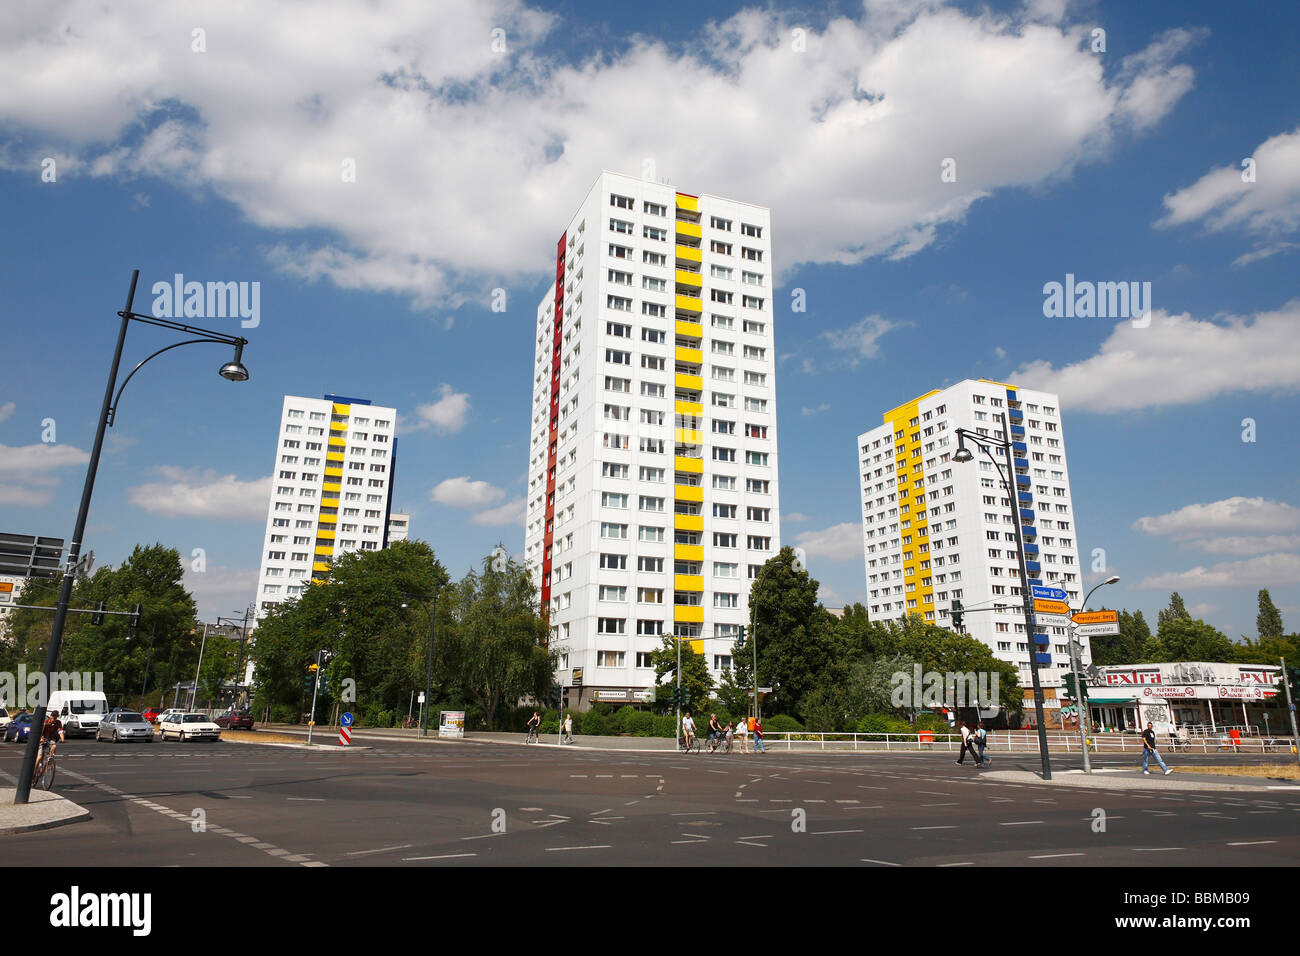 Plattenbau, prefabricated concrete high-rise apartment buildings, Berlin, Germany, Europe Stock Photo